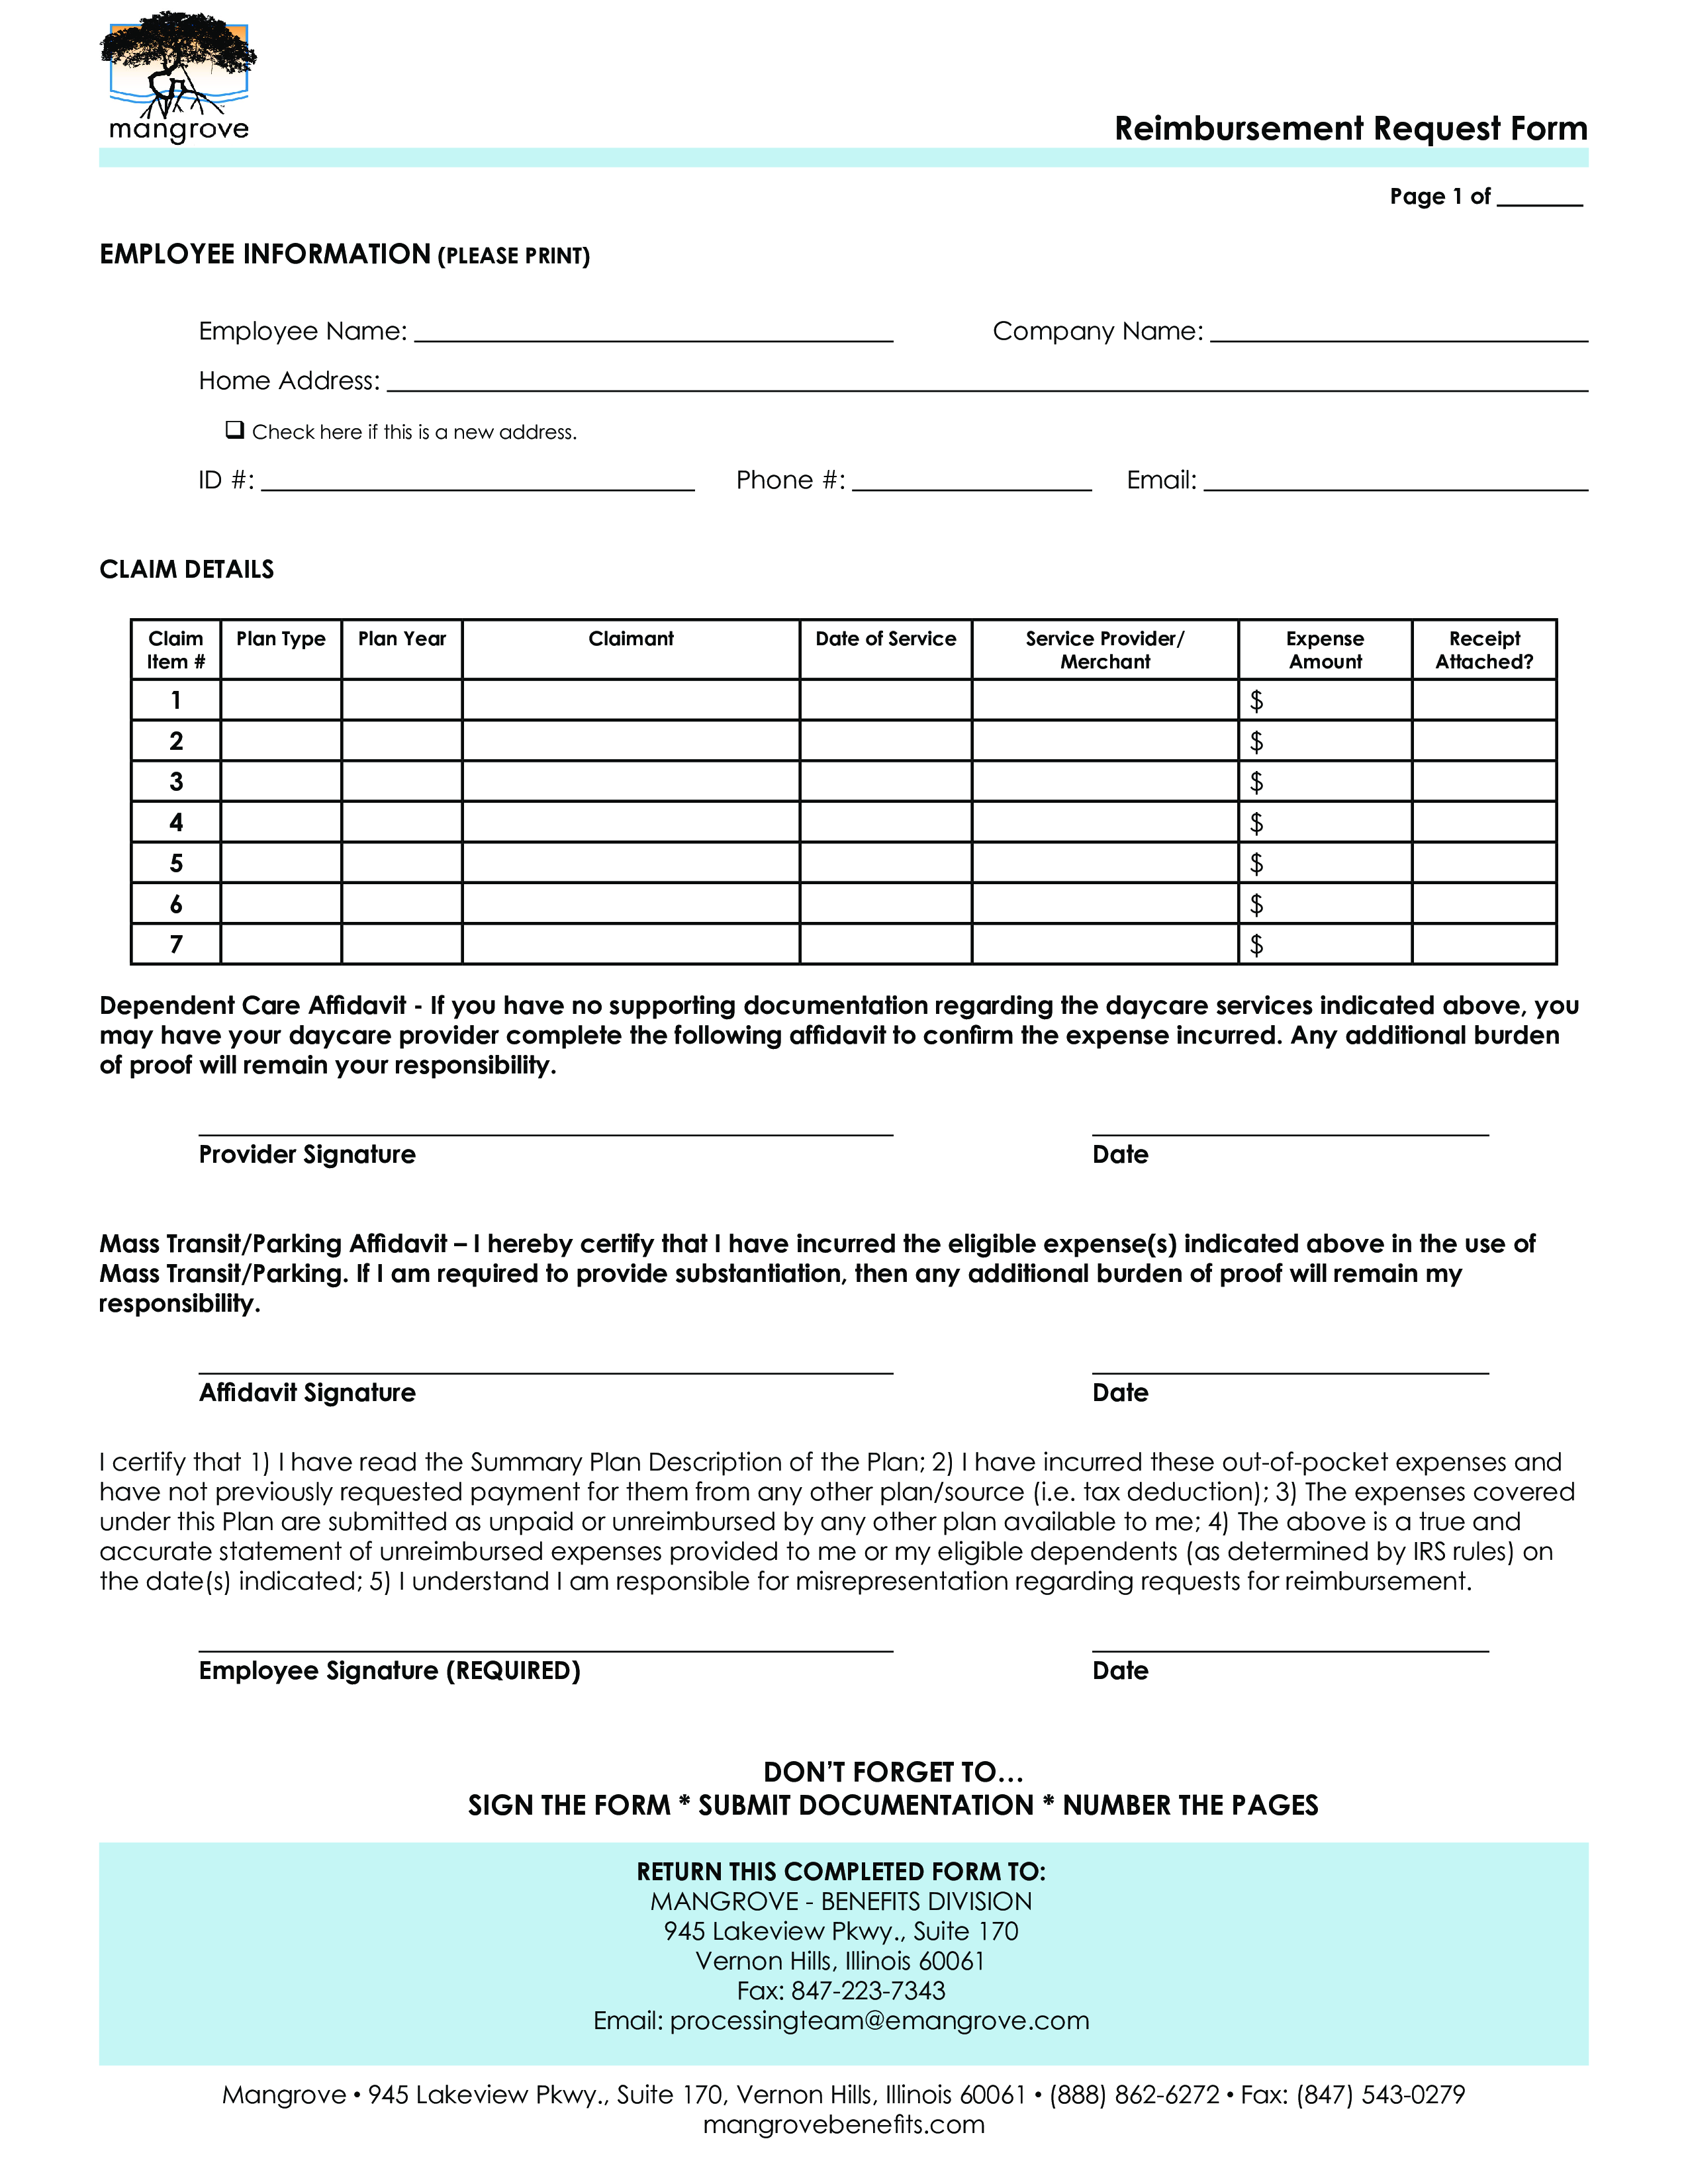 reimbursement-request-form-templates-at-allbusinesstemplates